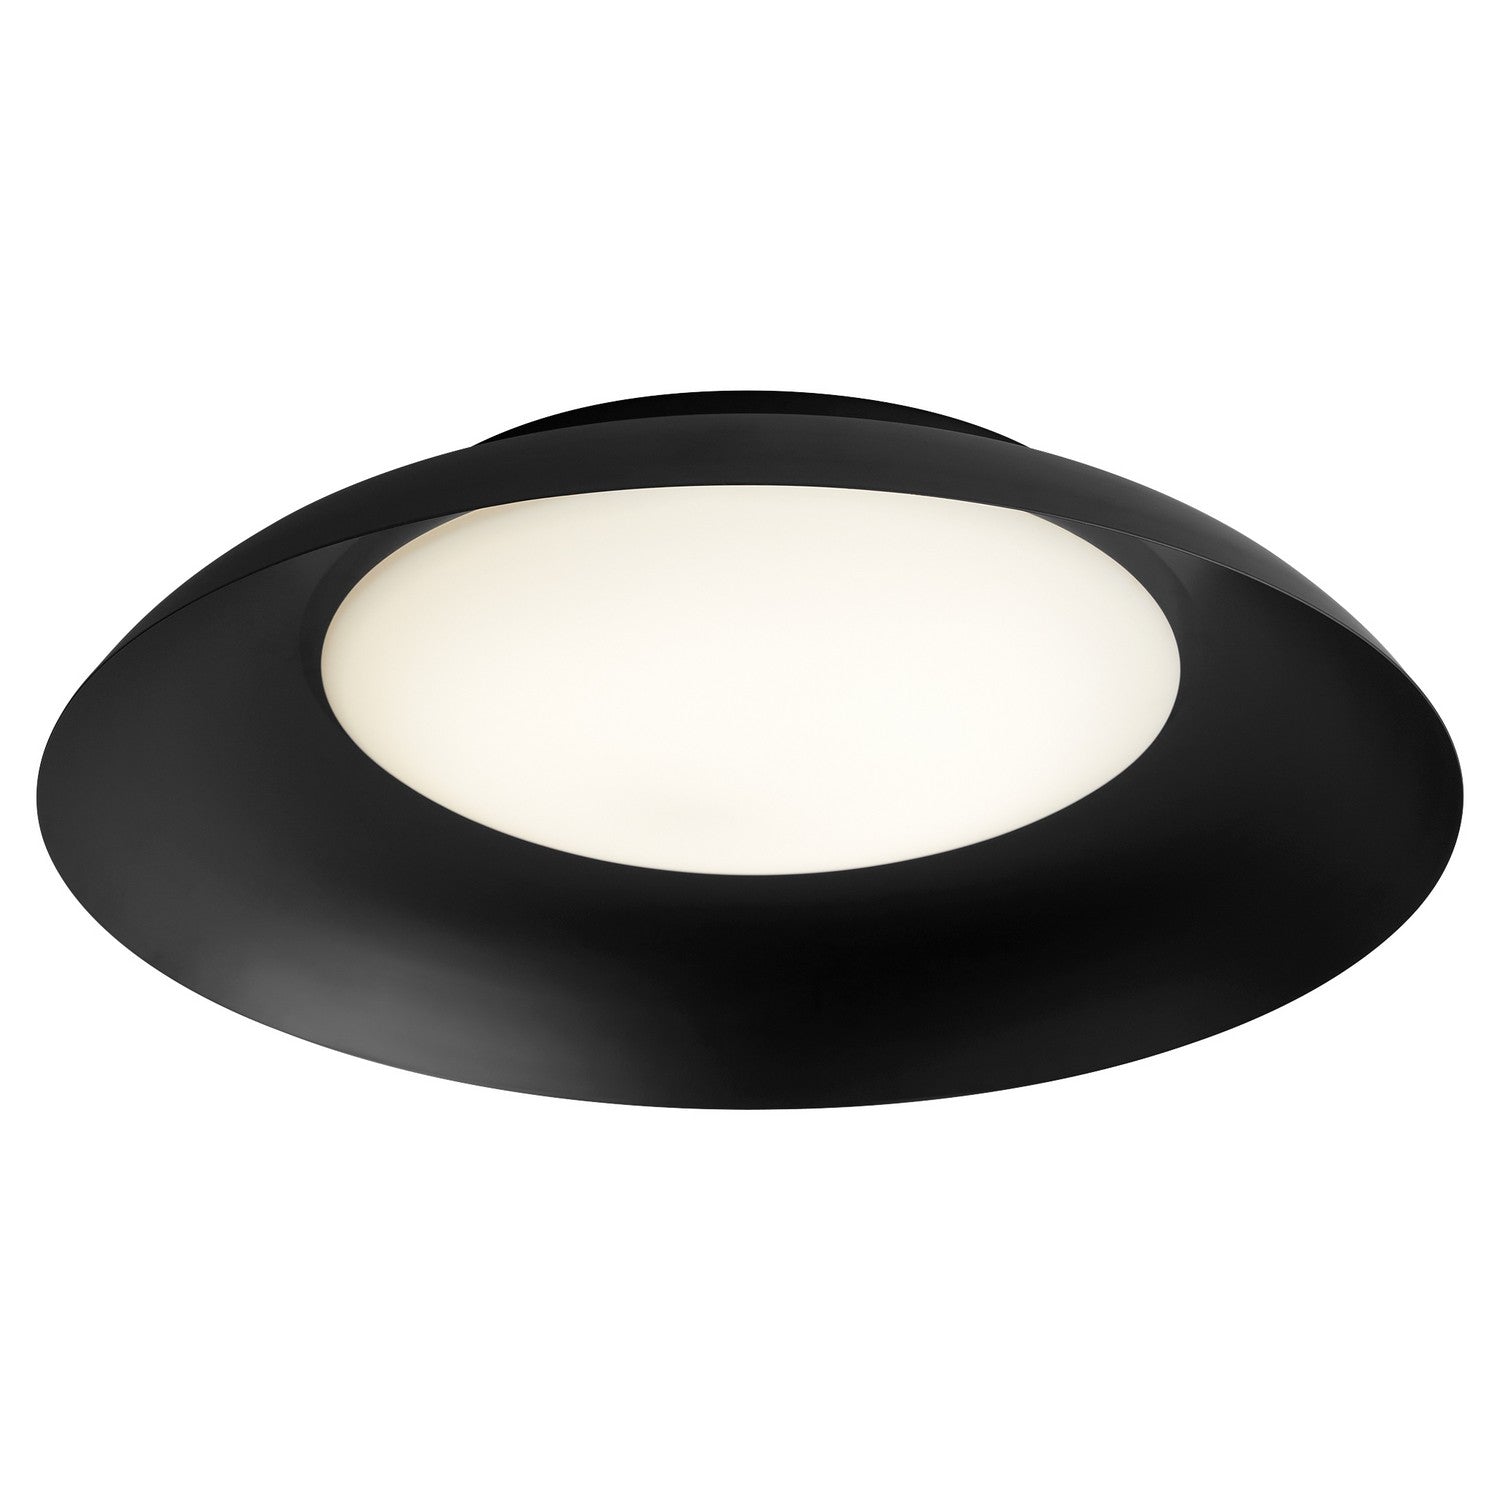 Oxygen Bongo 3-679-15 Flush Ceiling Light Fixture - Black